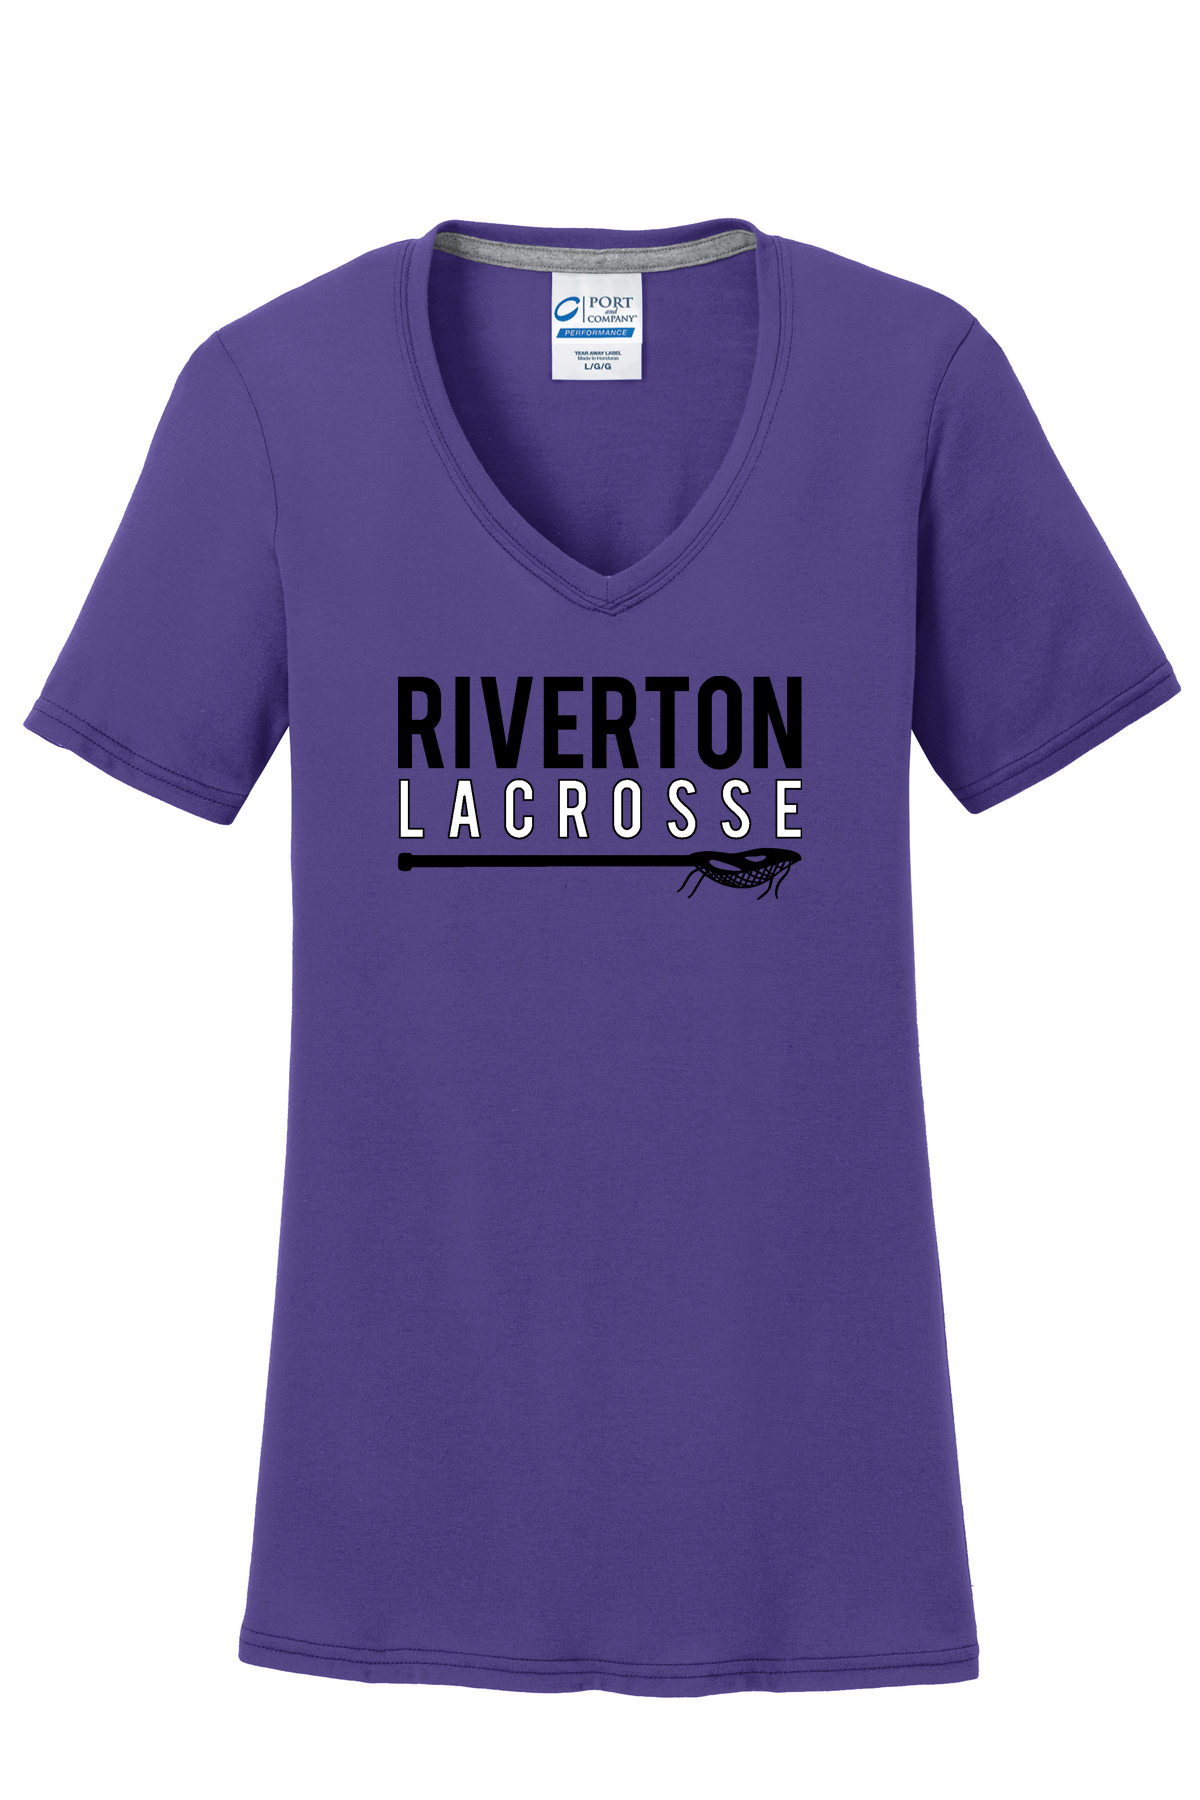 Riverton Lacrosse Women's T-Shirt